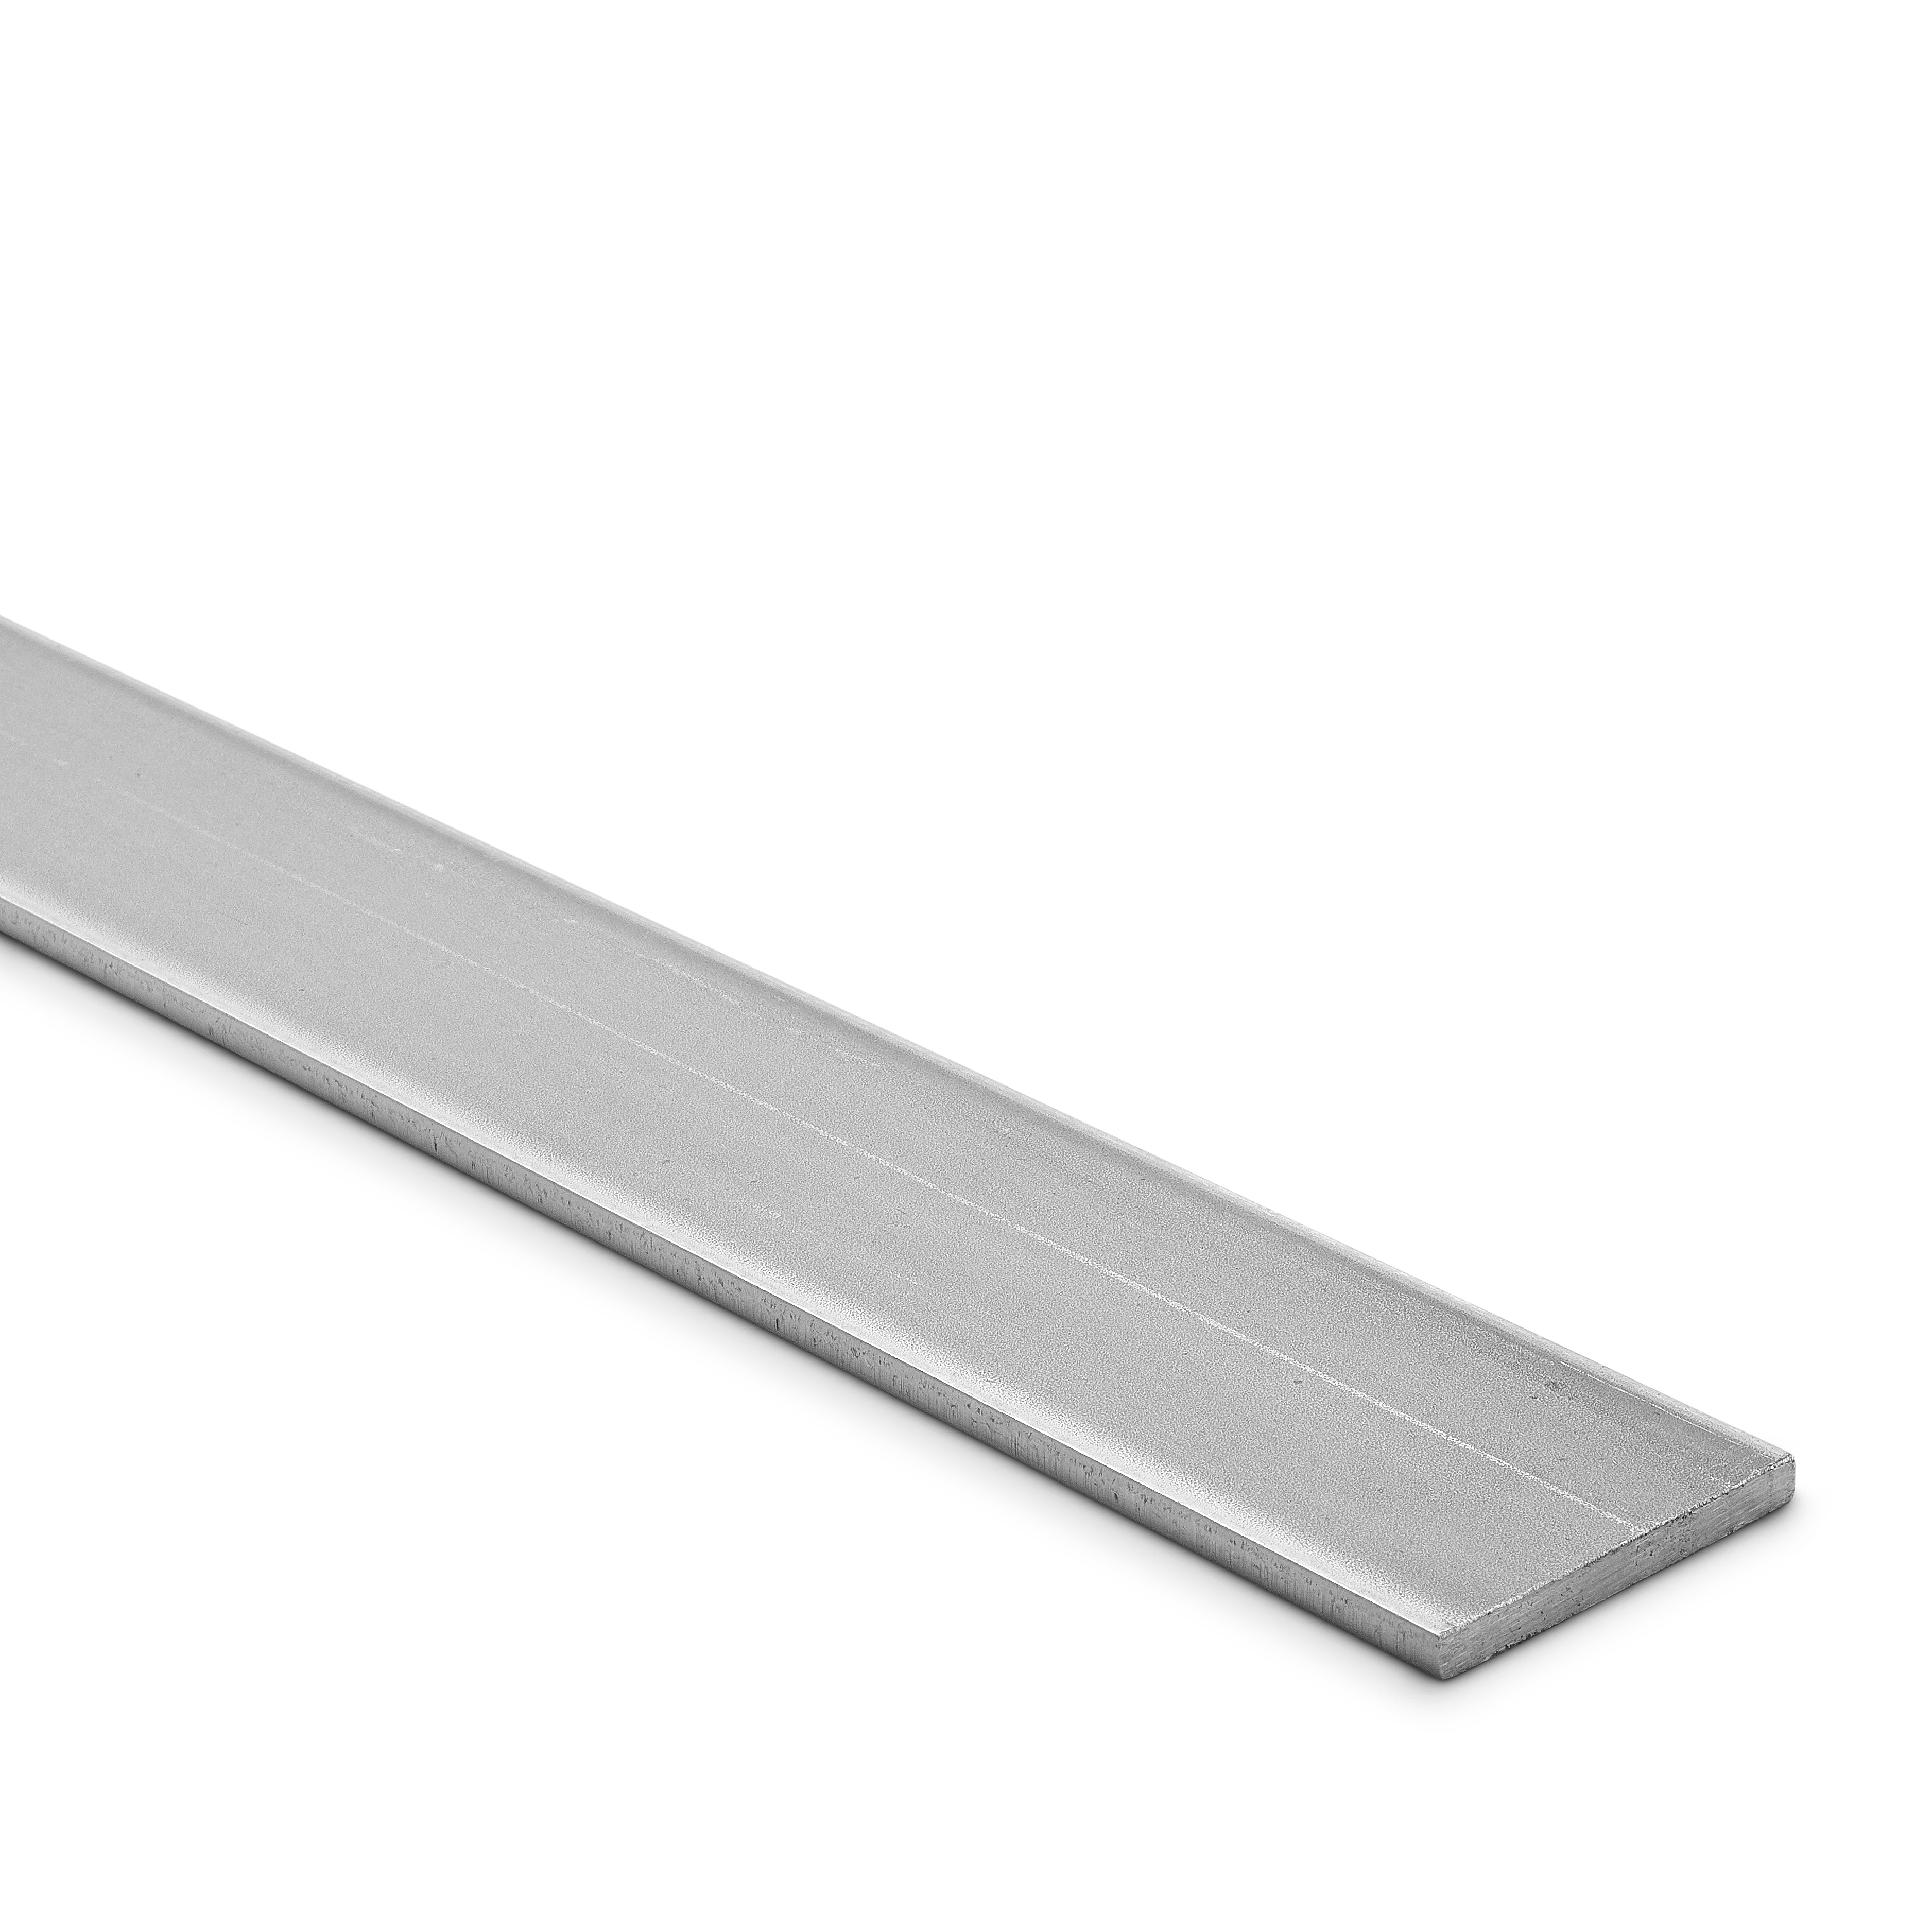 Details about  / Stainless Steel Flat bar 12mm -/> 75mm Width Grade 304 100mm Length